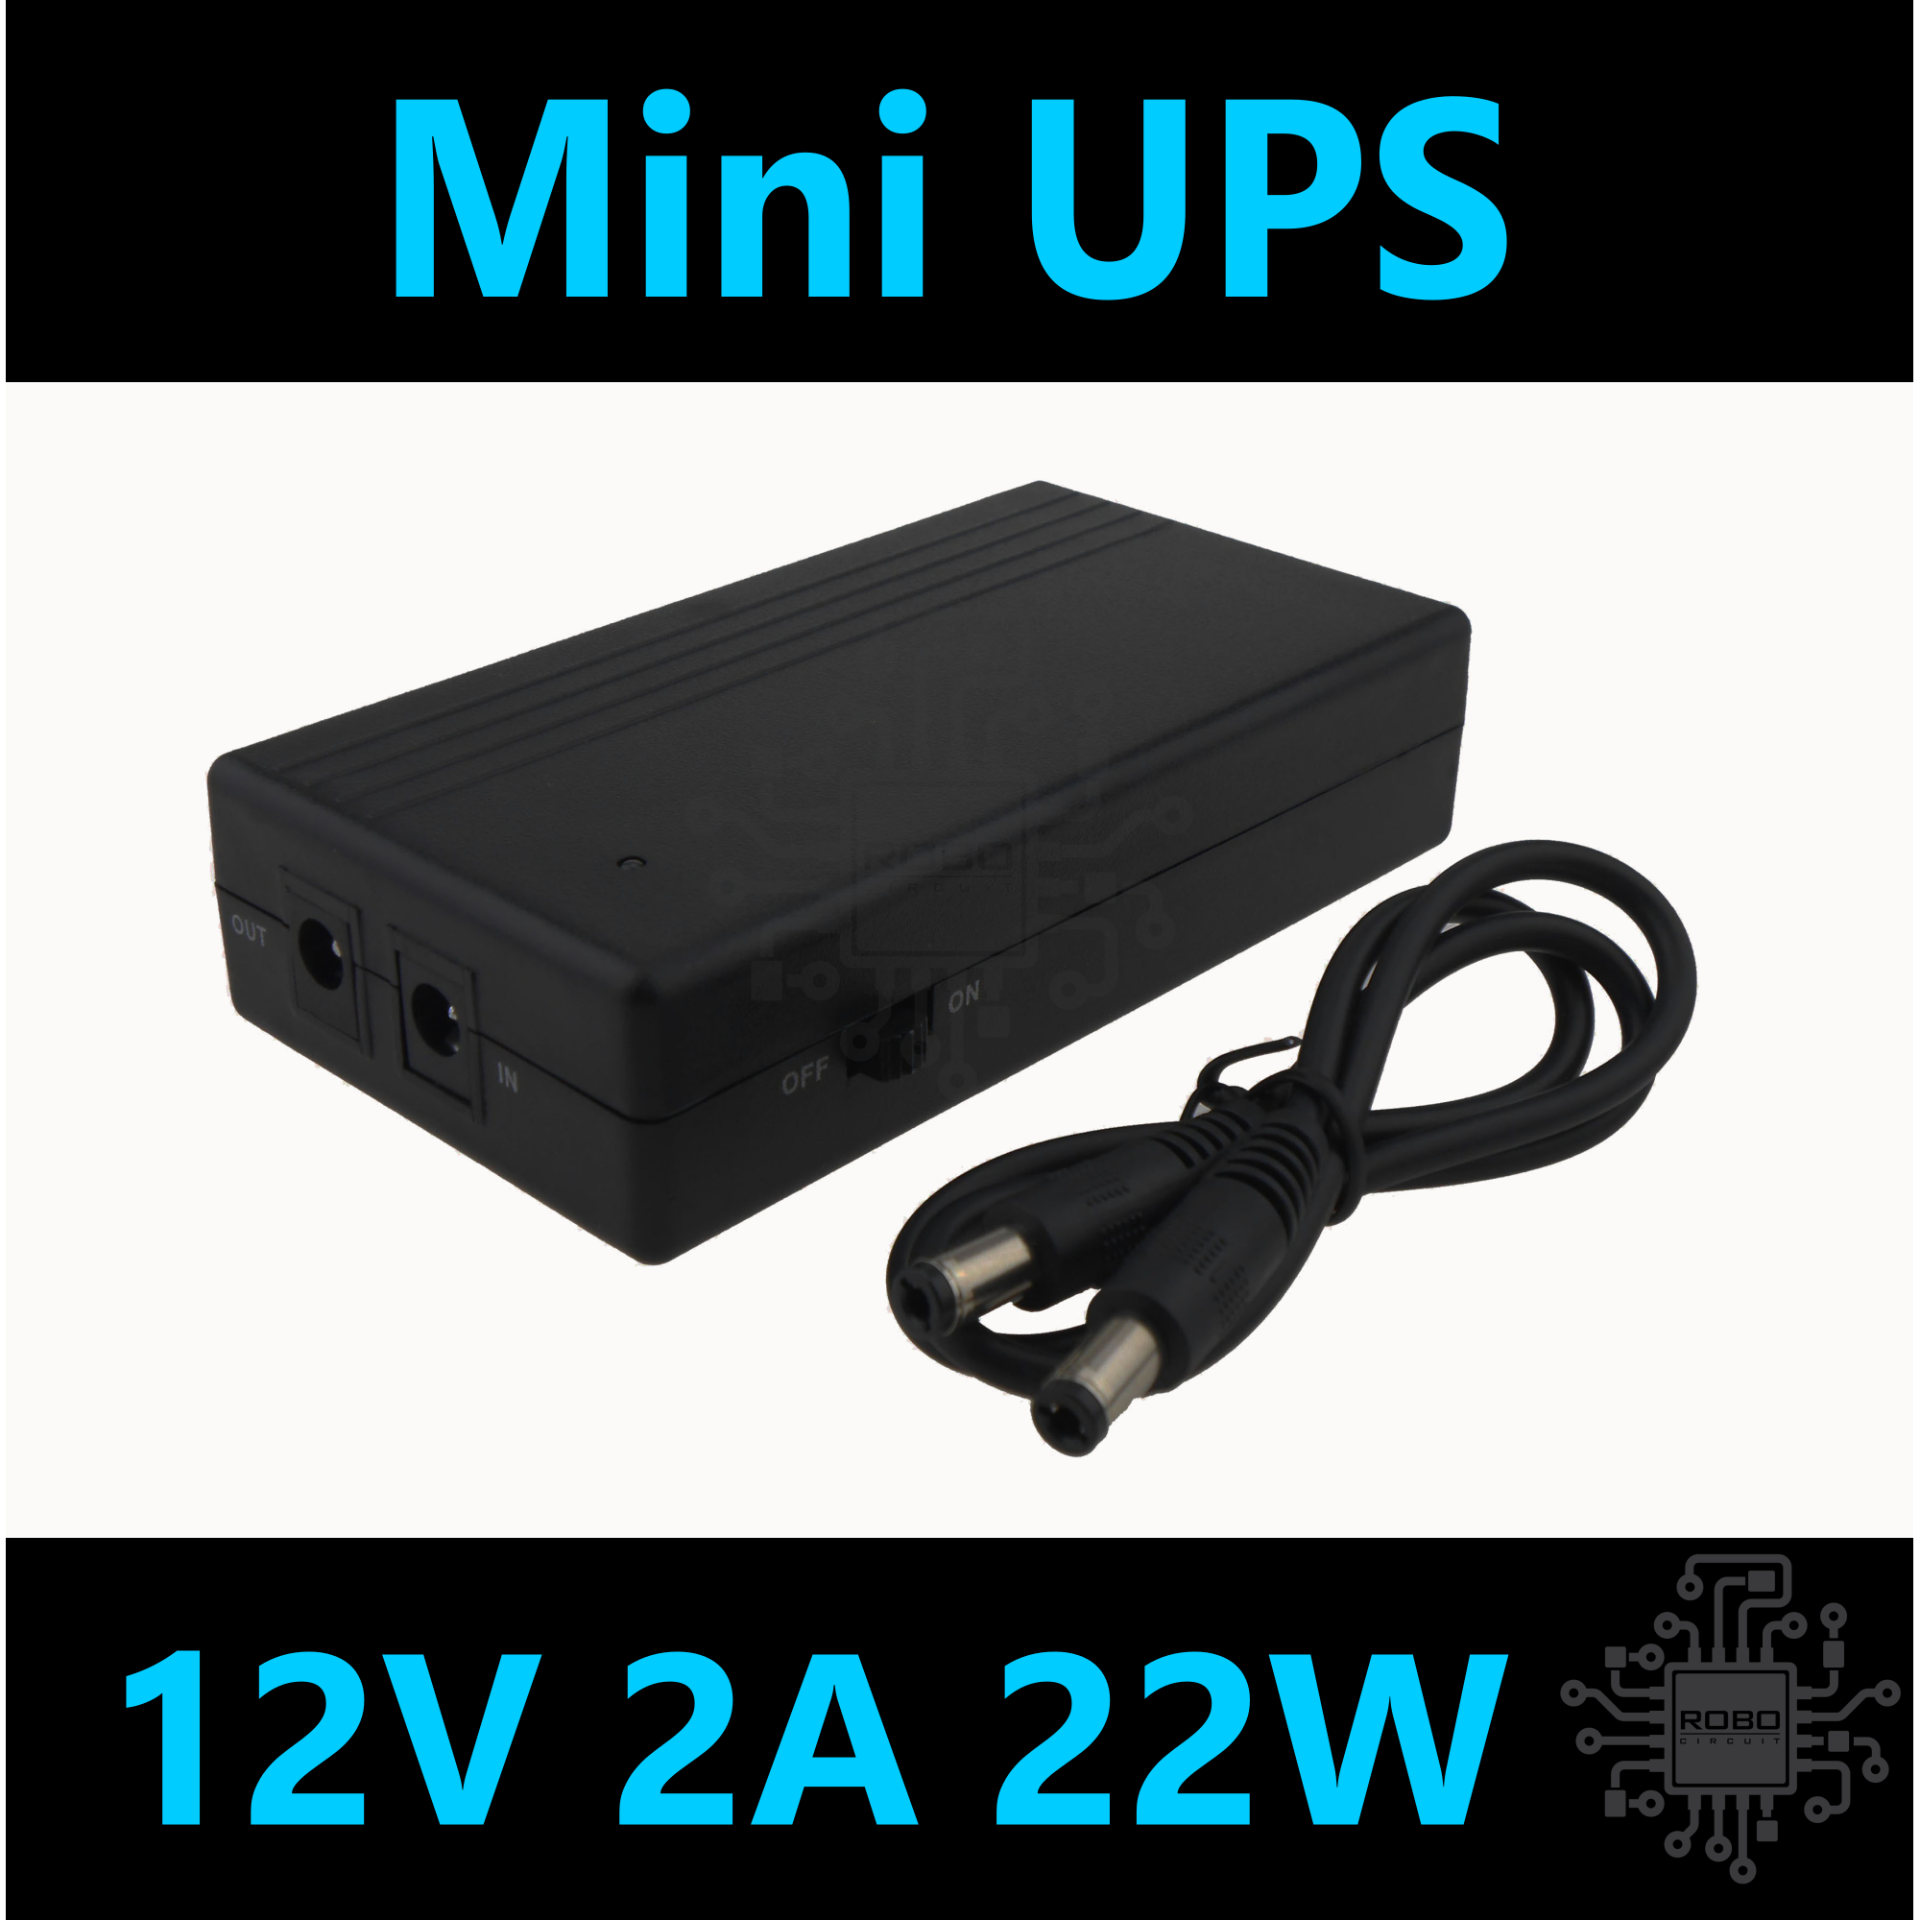 Mini UPS 12V 2A (22W) แบตสำรองไฟสำหรับ Router, Finger Scran